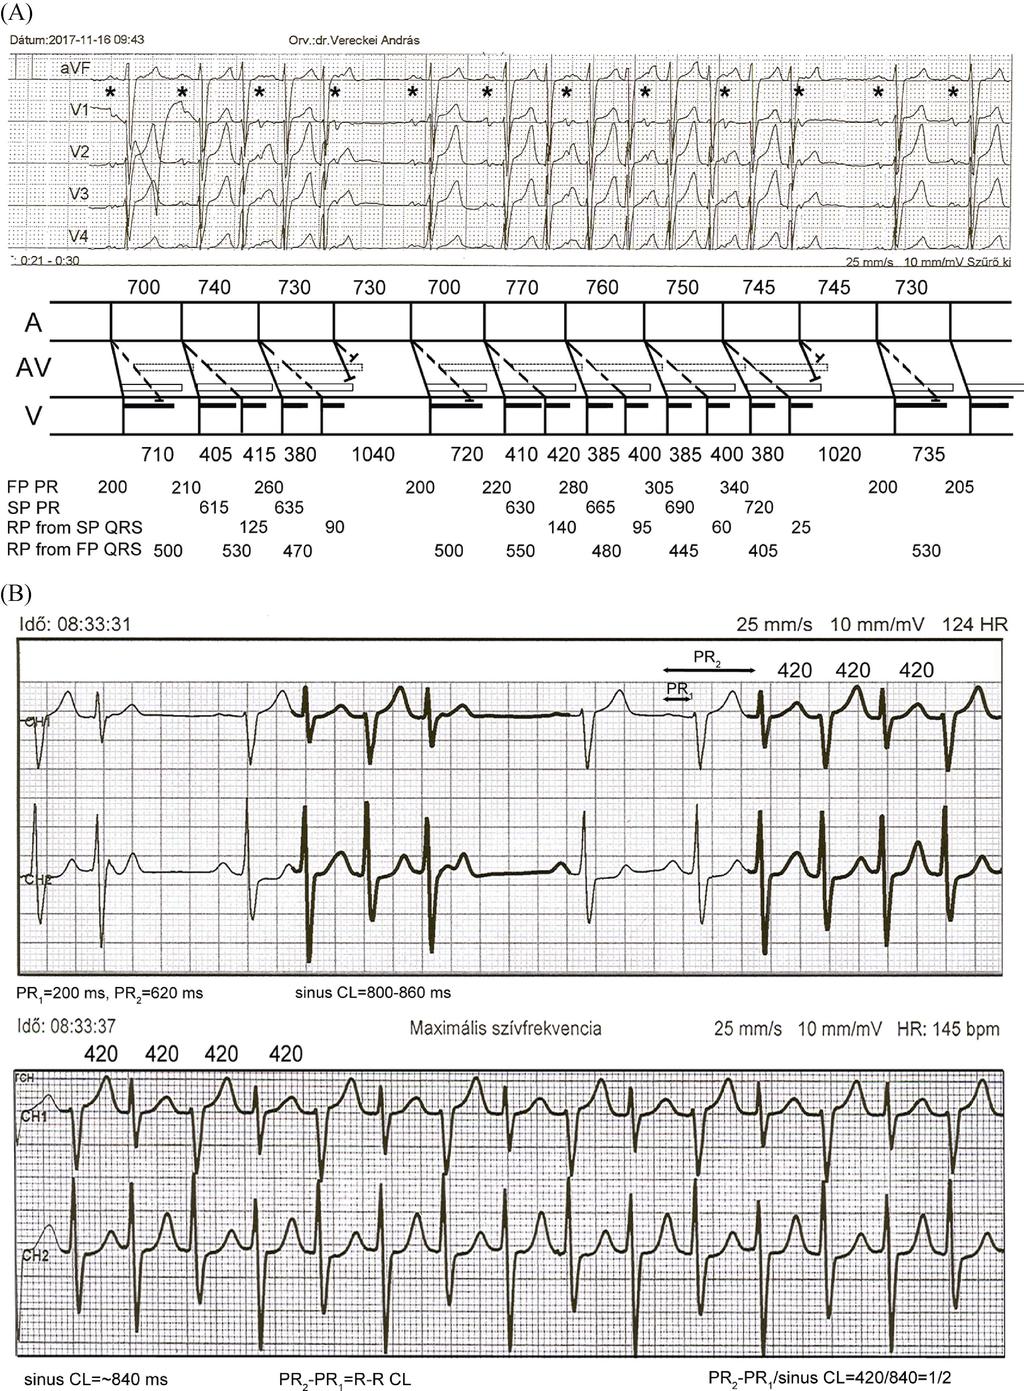 196 Vereckei A & Gellér L. Dual AV nodal nonreentrant tachycardia Figure 3. The elucidation of the possible mechanisms of arrhythmias shown in Figure 2 and Figure 1 4th rhythm strip.